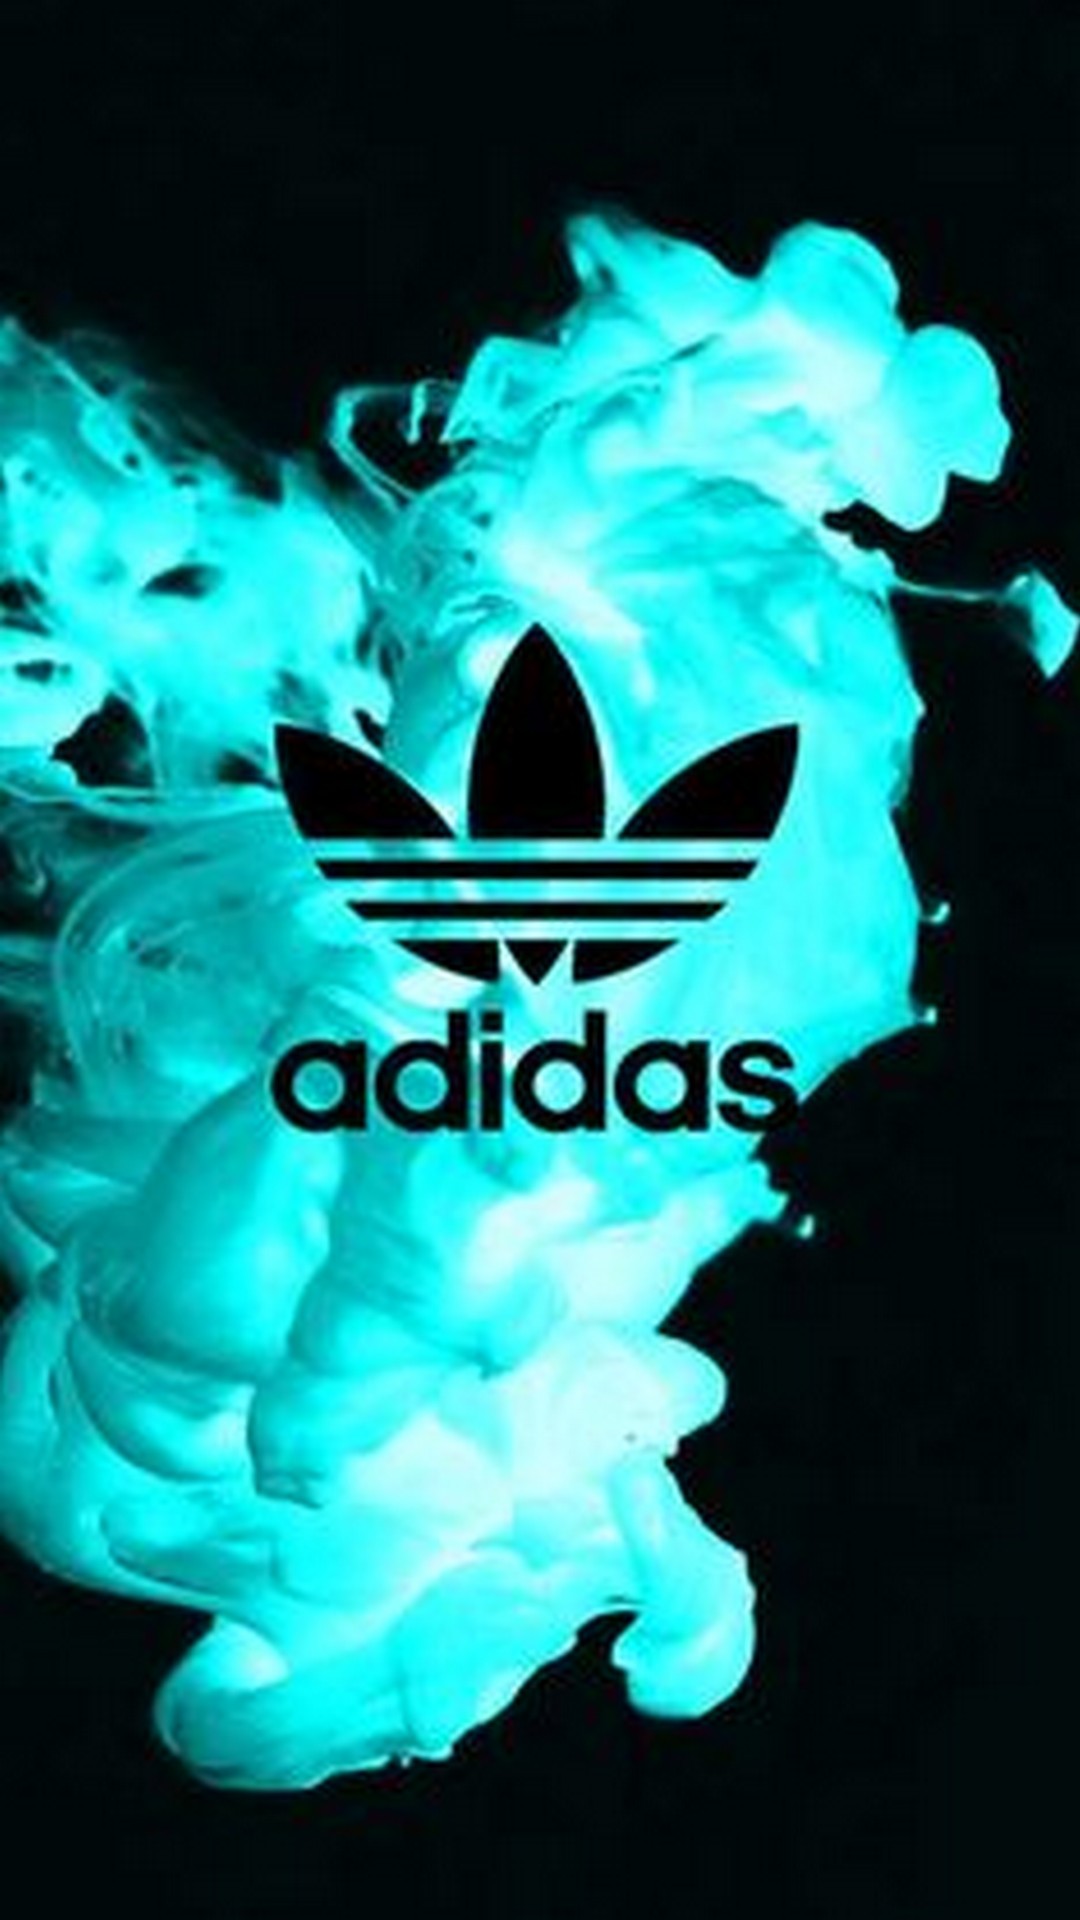 52 Adidas Wallpapers For Iphone On Wallpapersafari